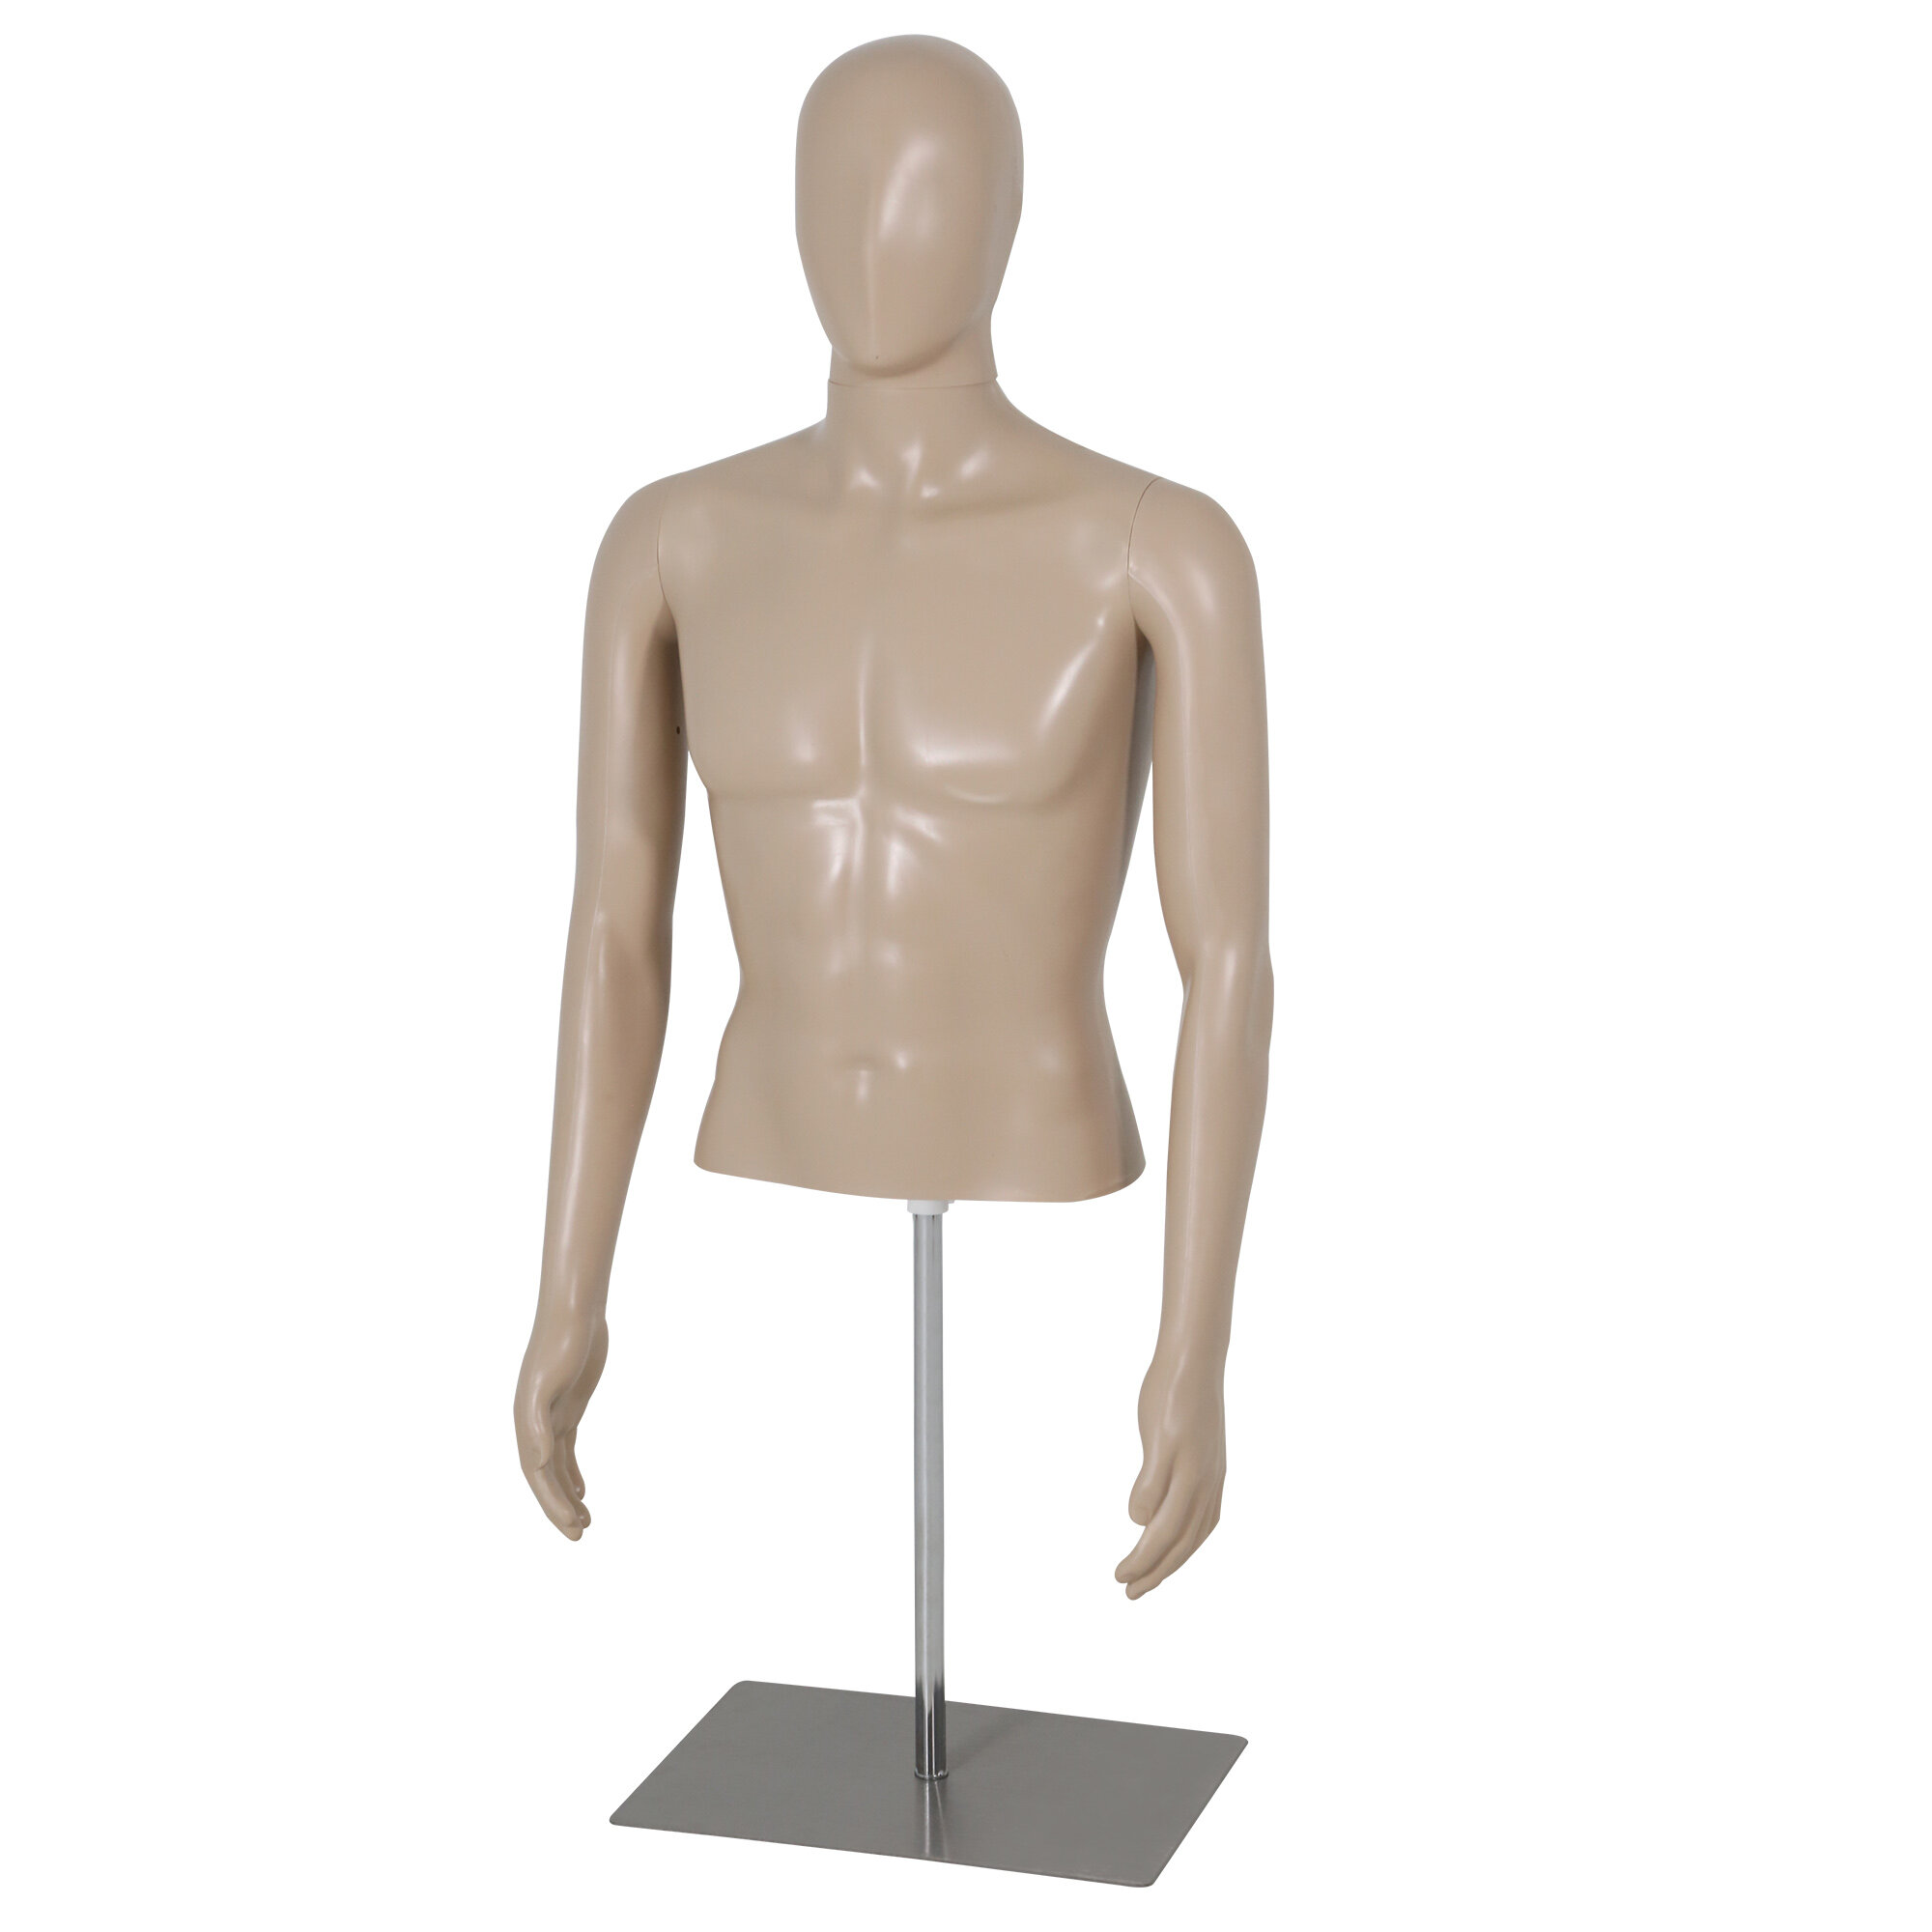 HALF BODY MALE Mannequin Realistic Plastic Head Turn Dress Form Display w/Base 